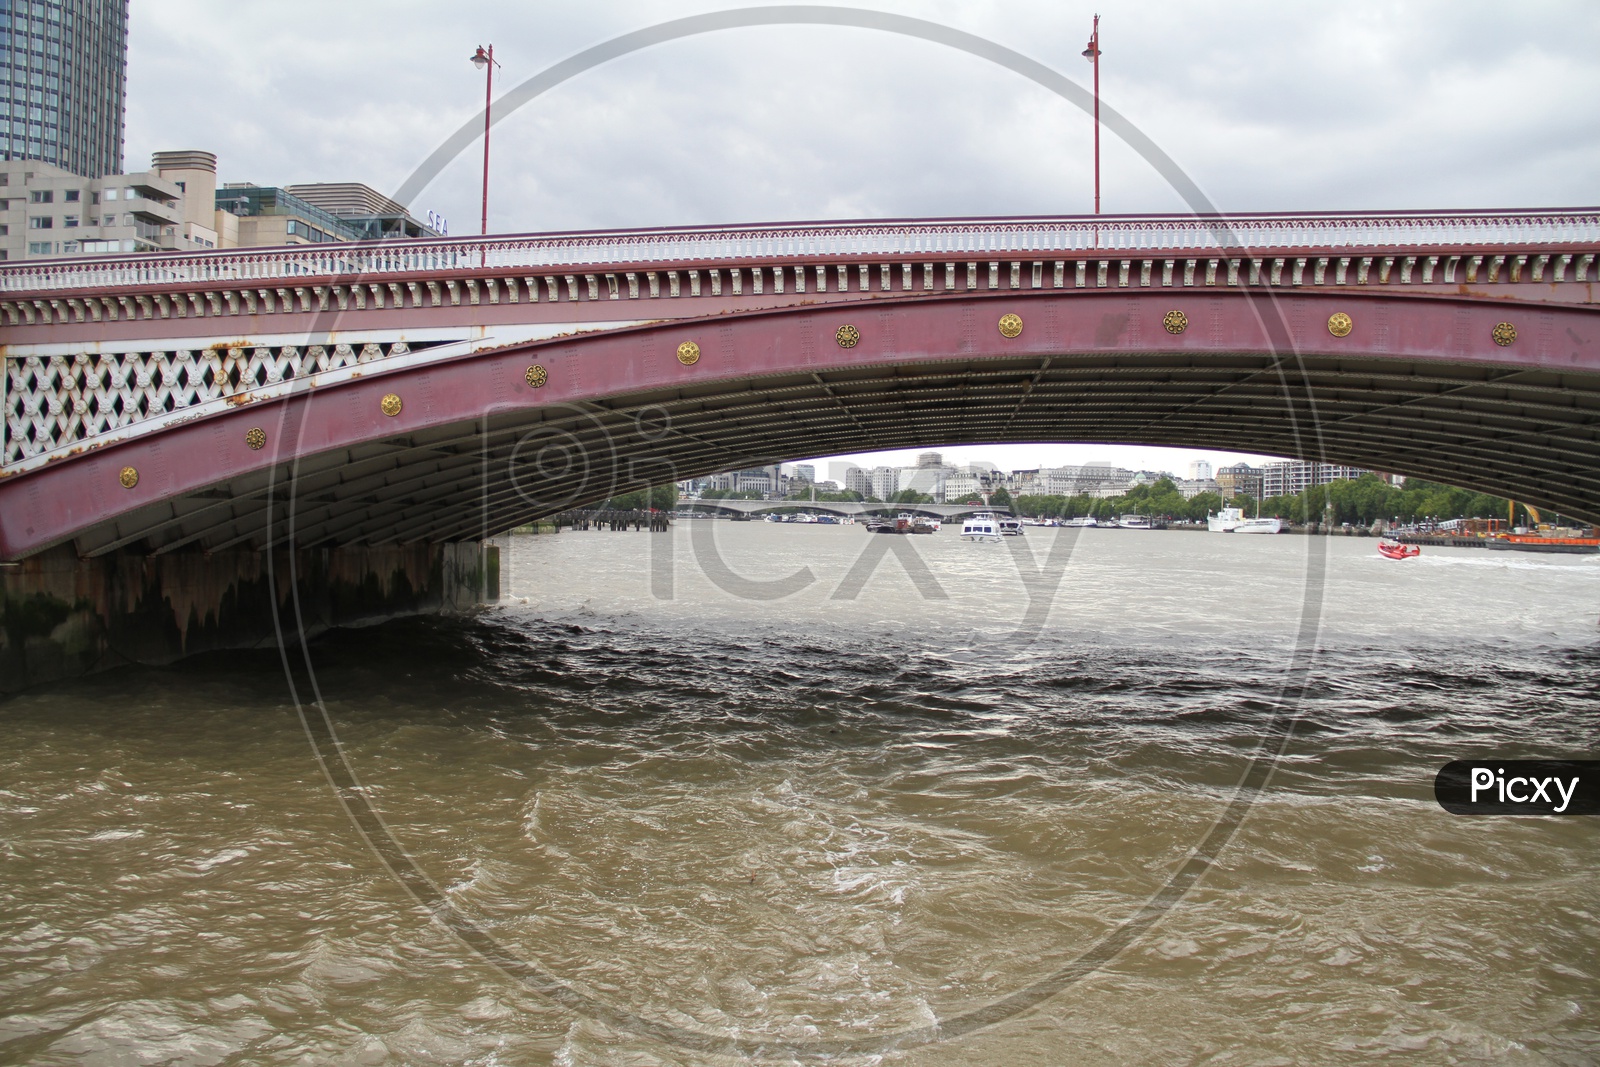 A Bridge on Thames River